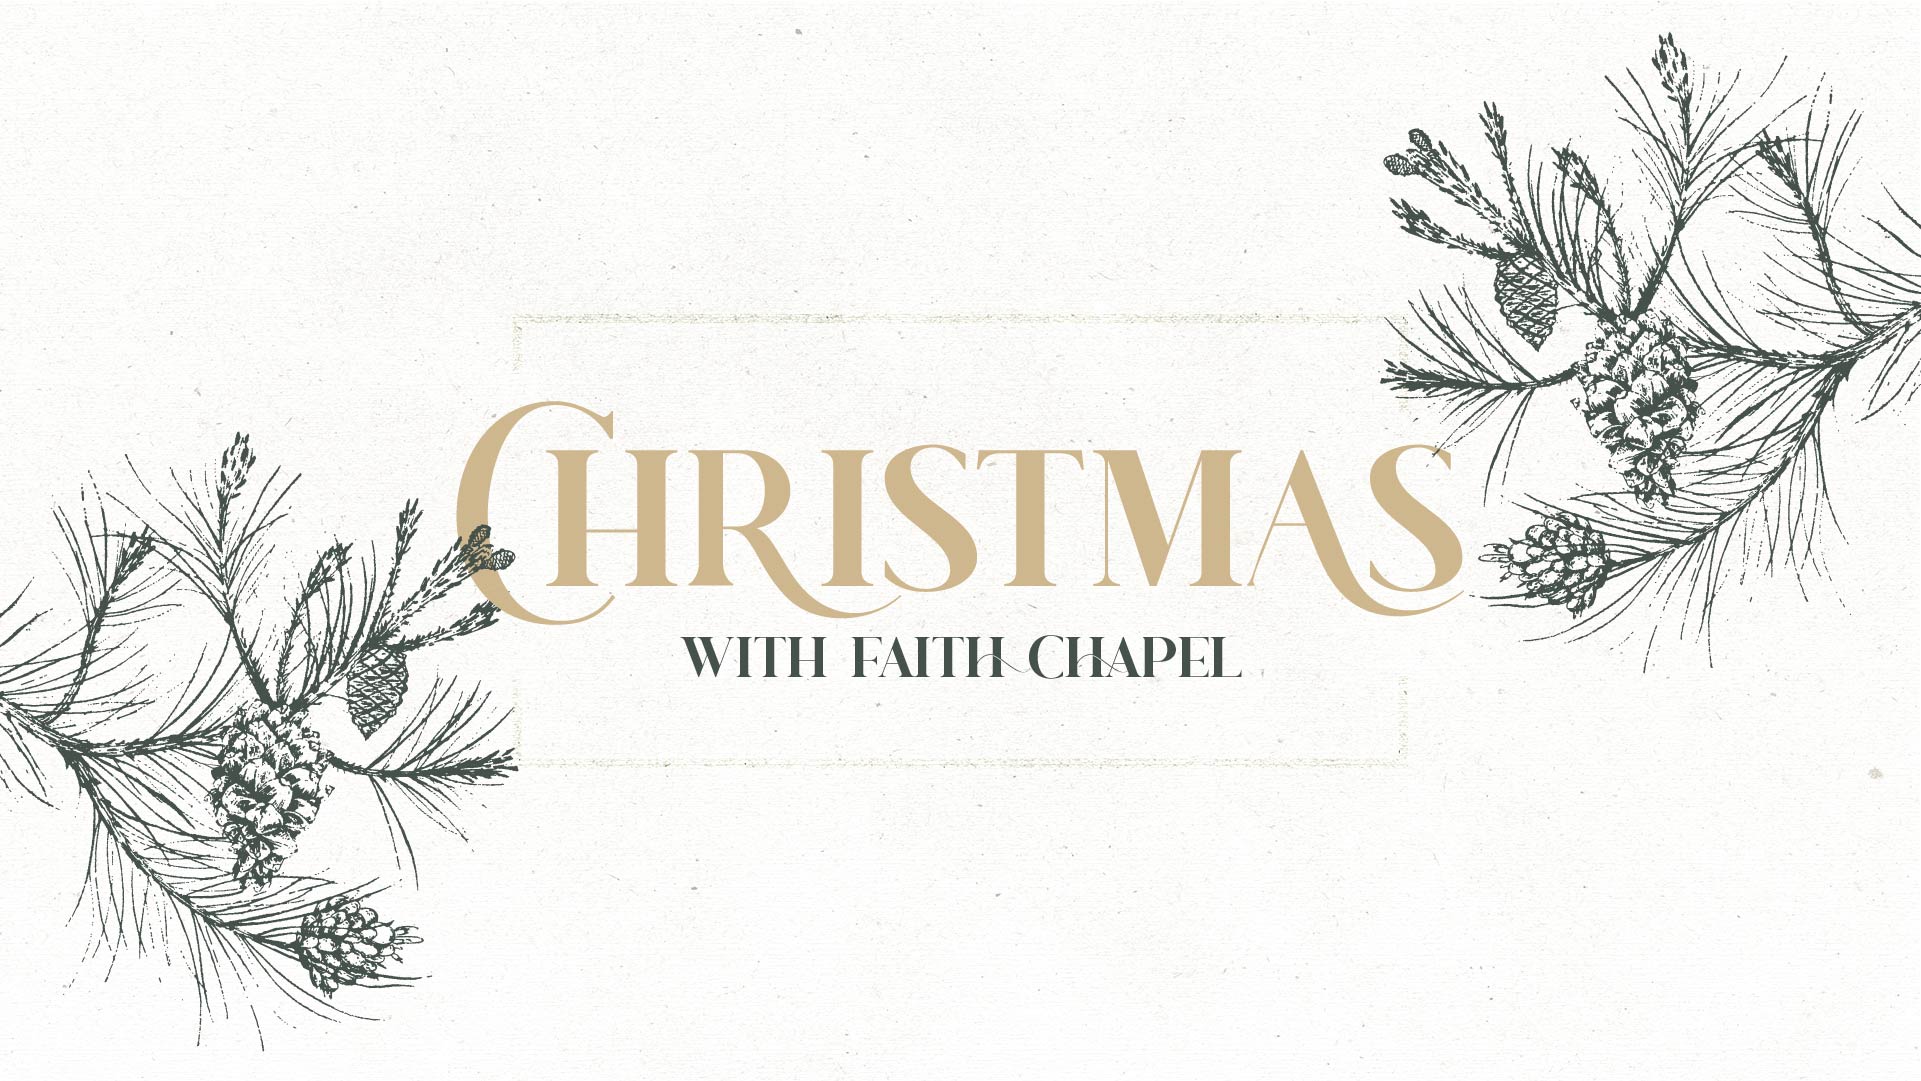 Celebrate Christmas Faith Chapel